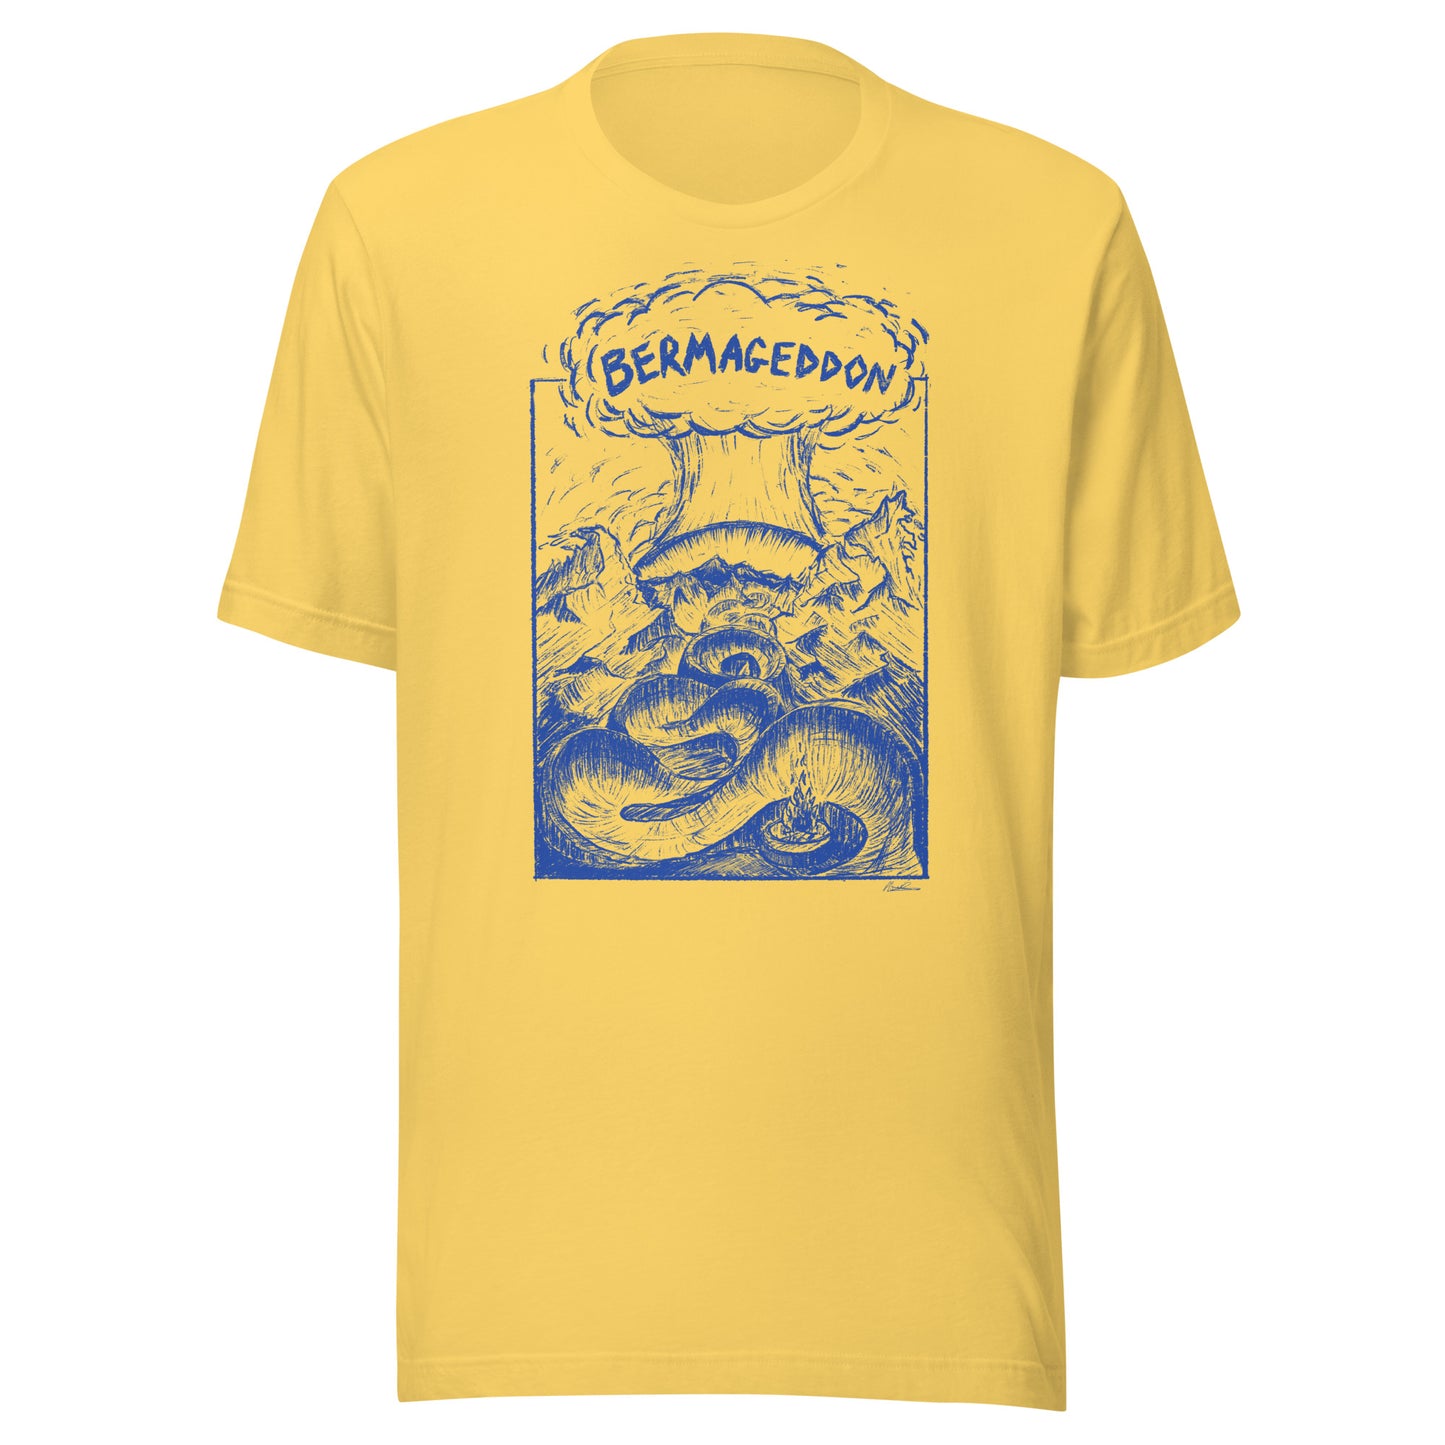 "Bermageddon" Unisex t-shirt